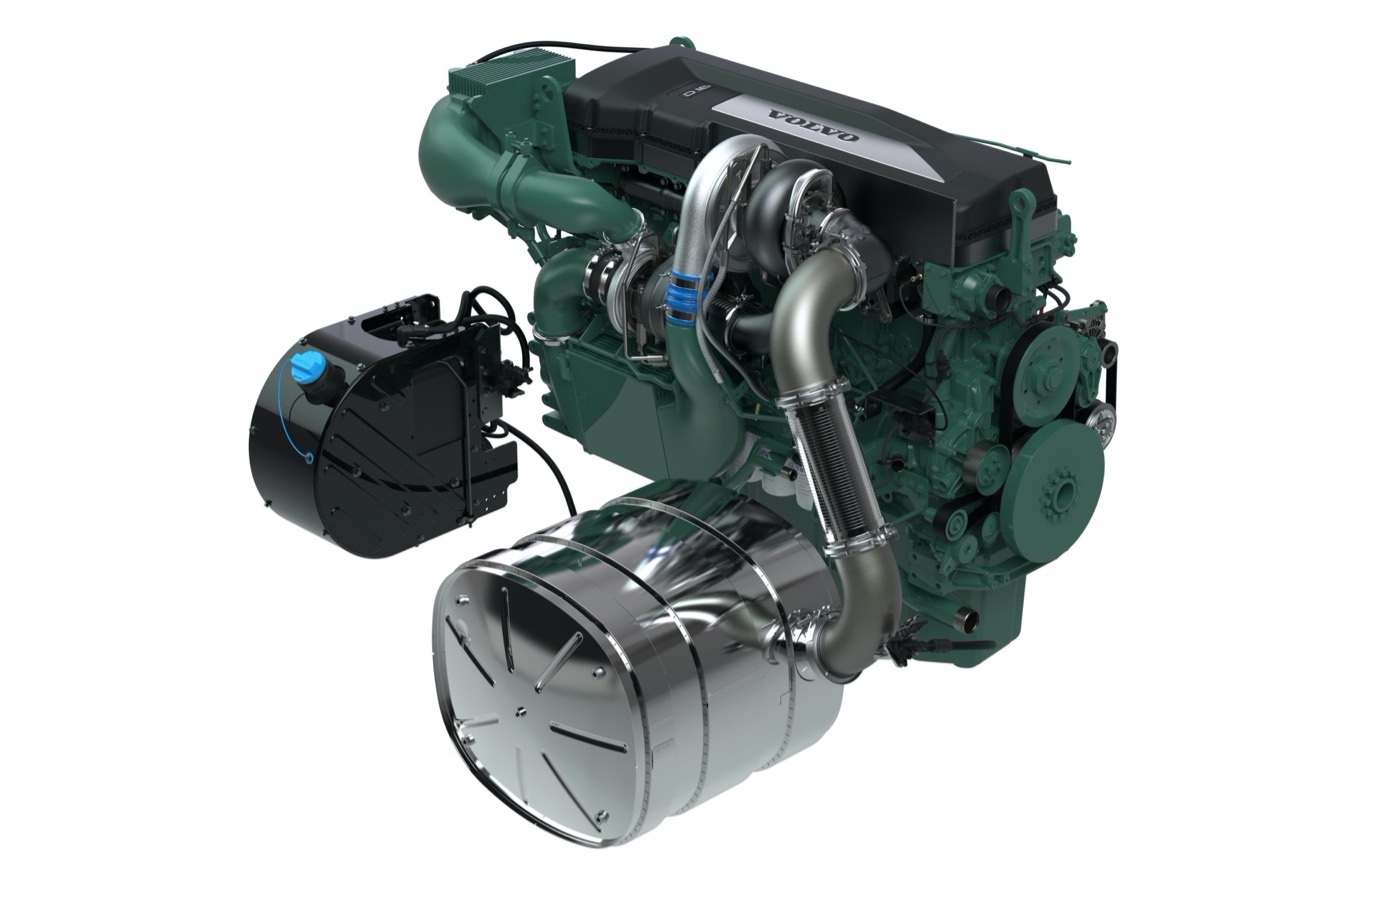 Volvo Penta's award-winning new D16 off-road engine